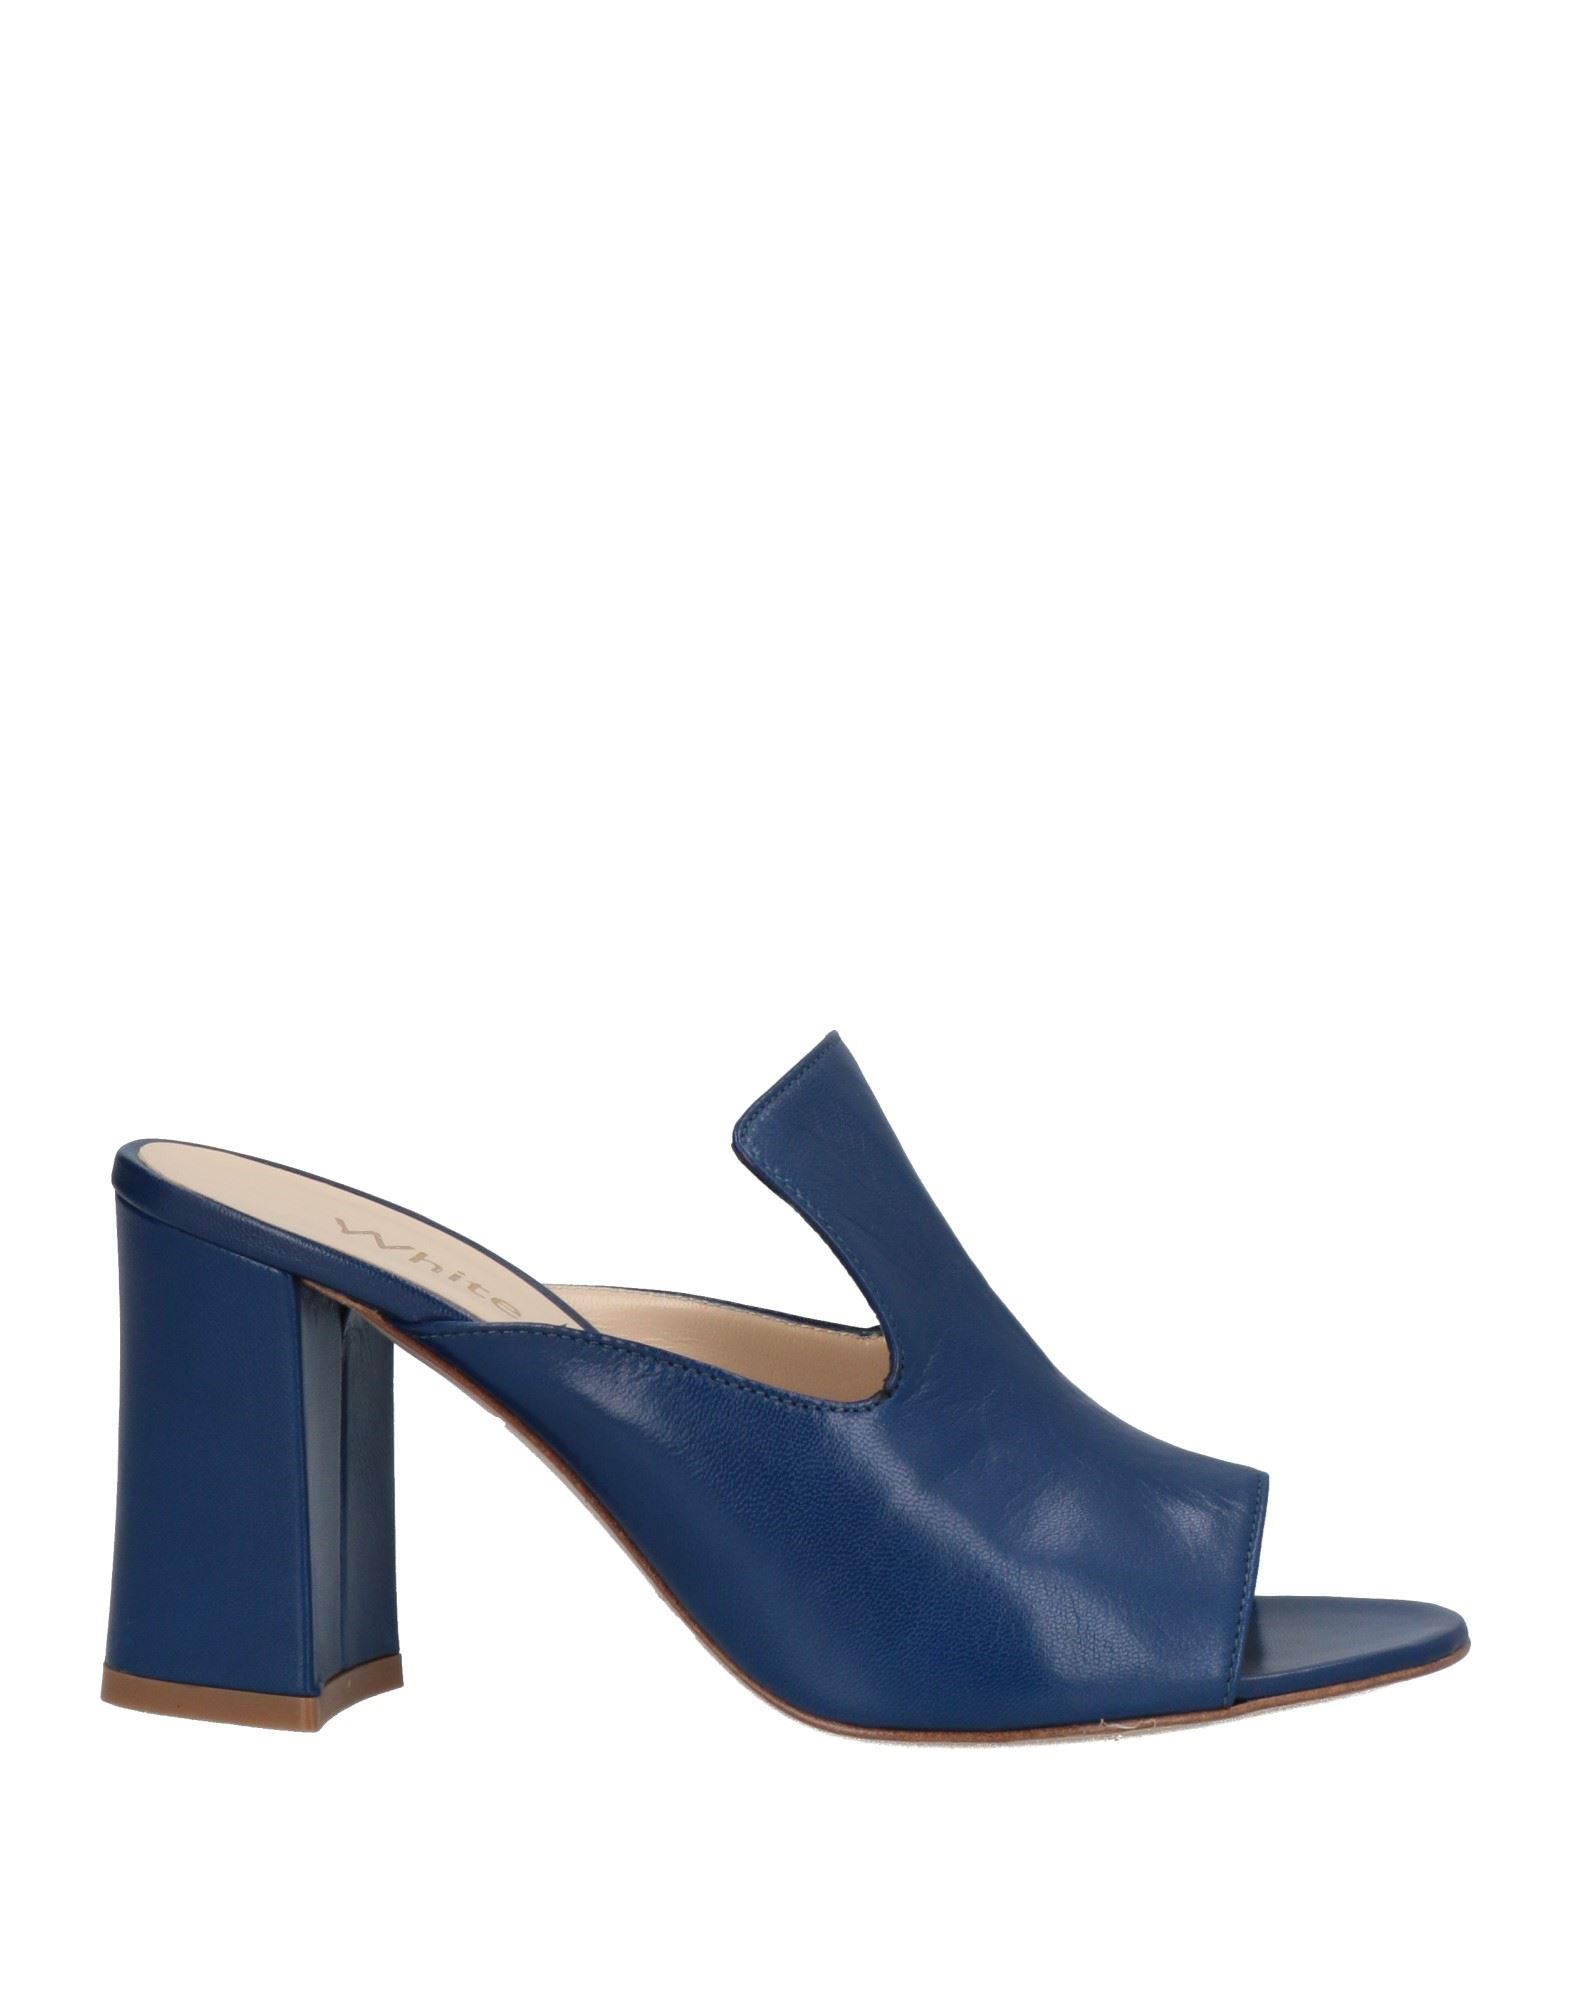 White D' Woman Sandals Bright Blue Size 7.5 Soft Leather